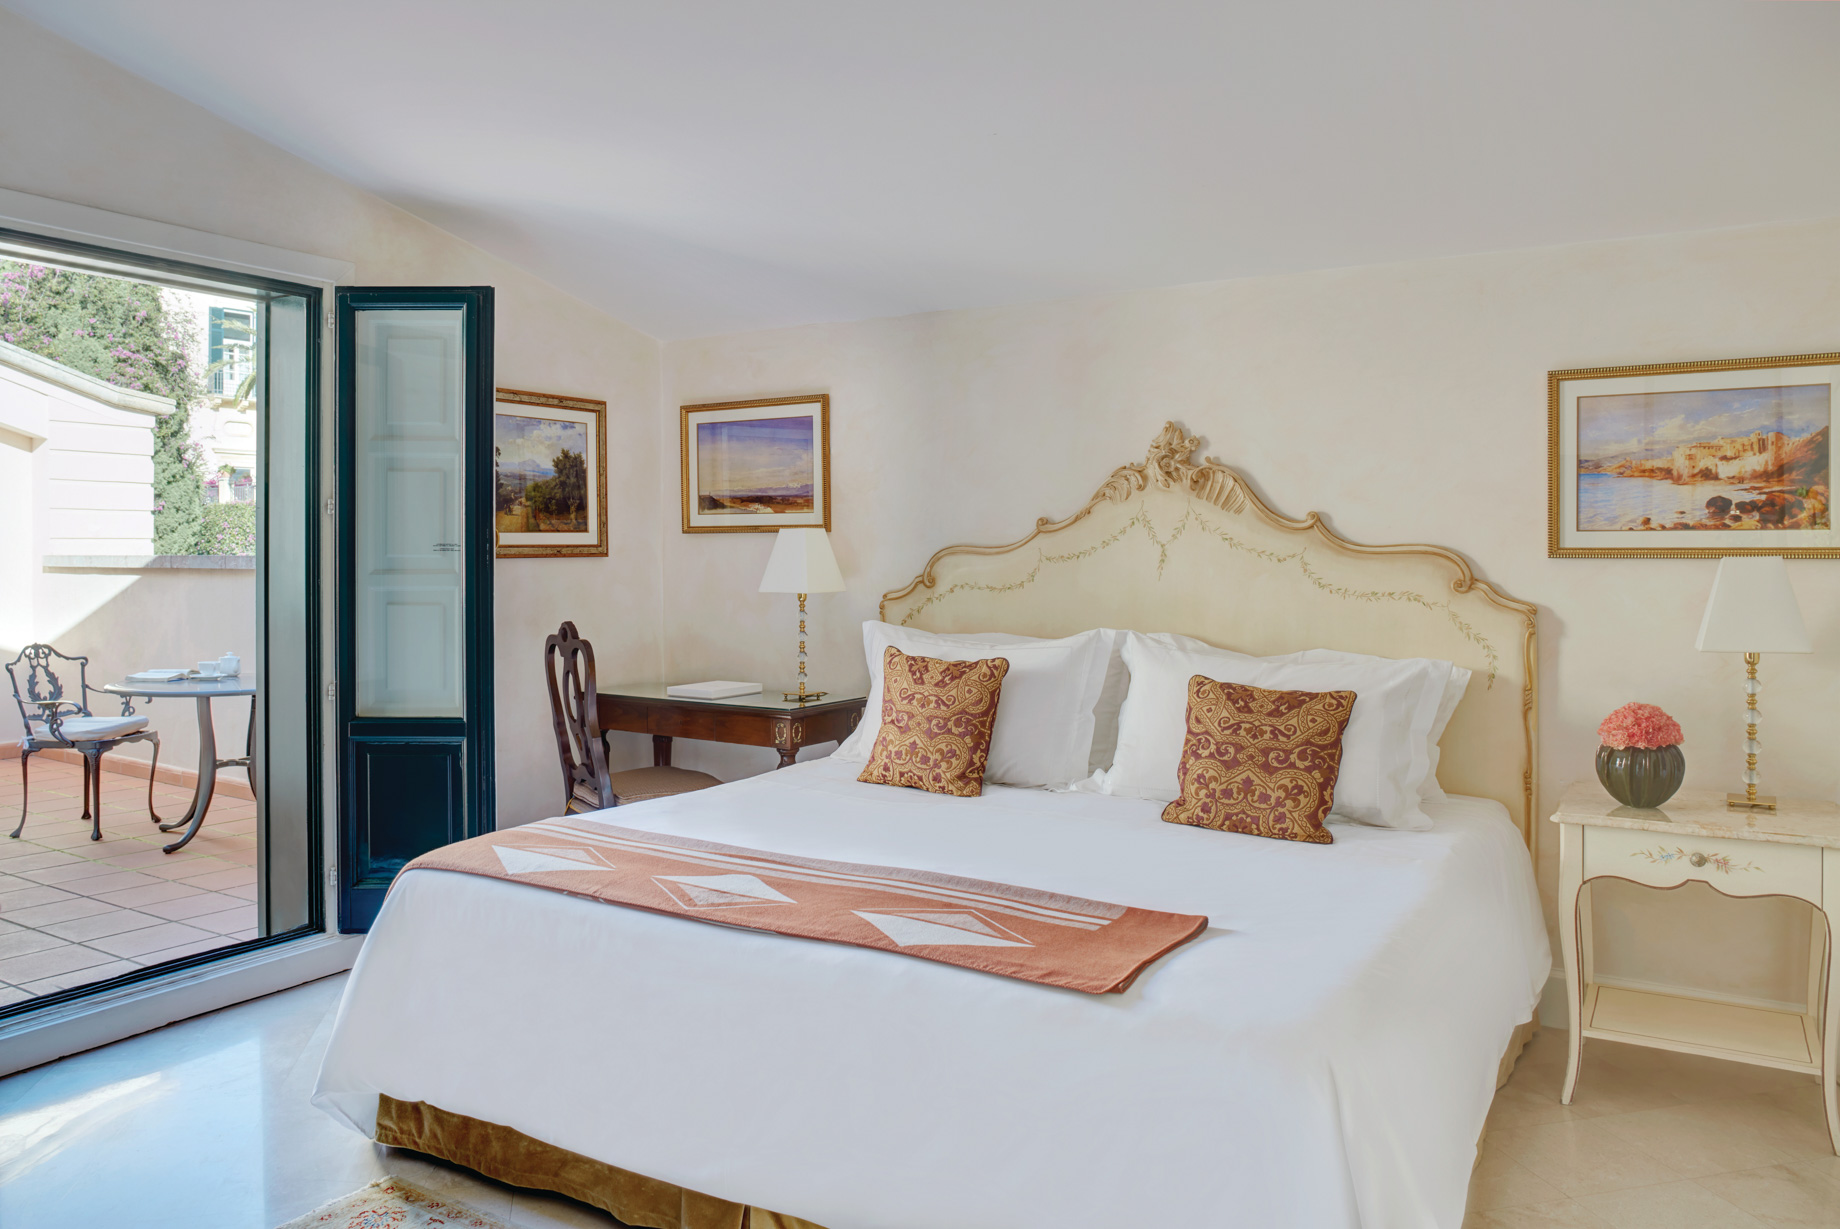 153 – Grand Hotel Timeo, A Belmond Hotel – Taormina, Italy – Greek Theatre Suite